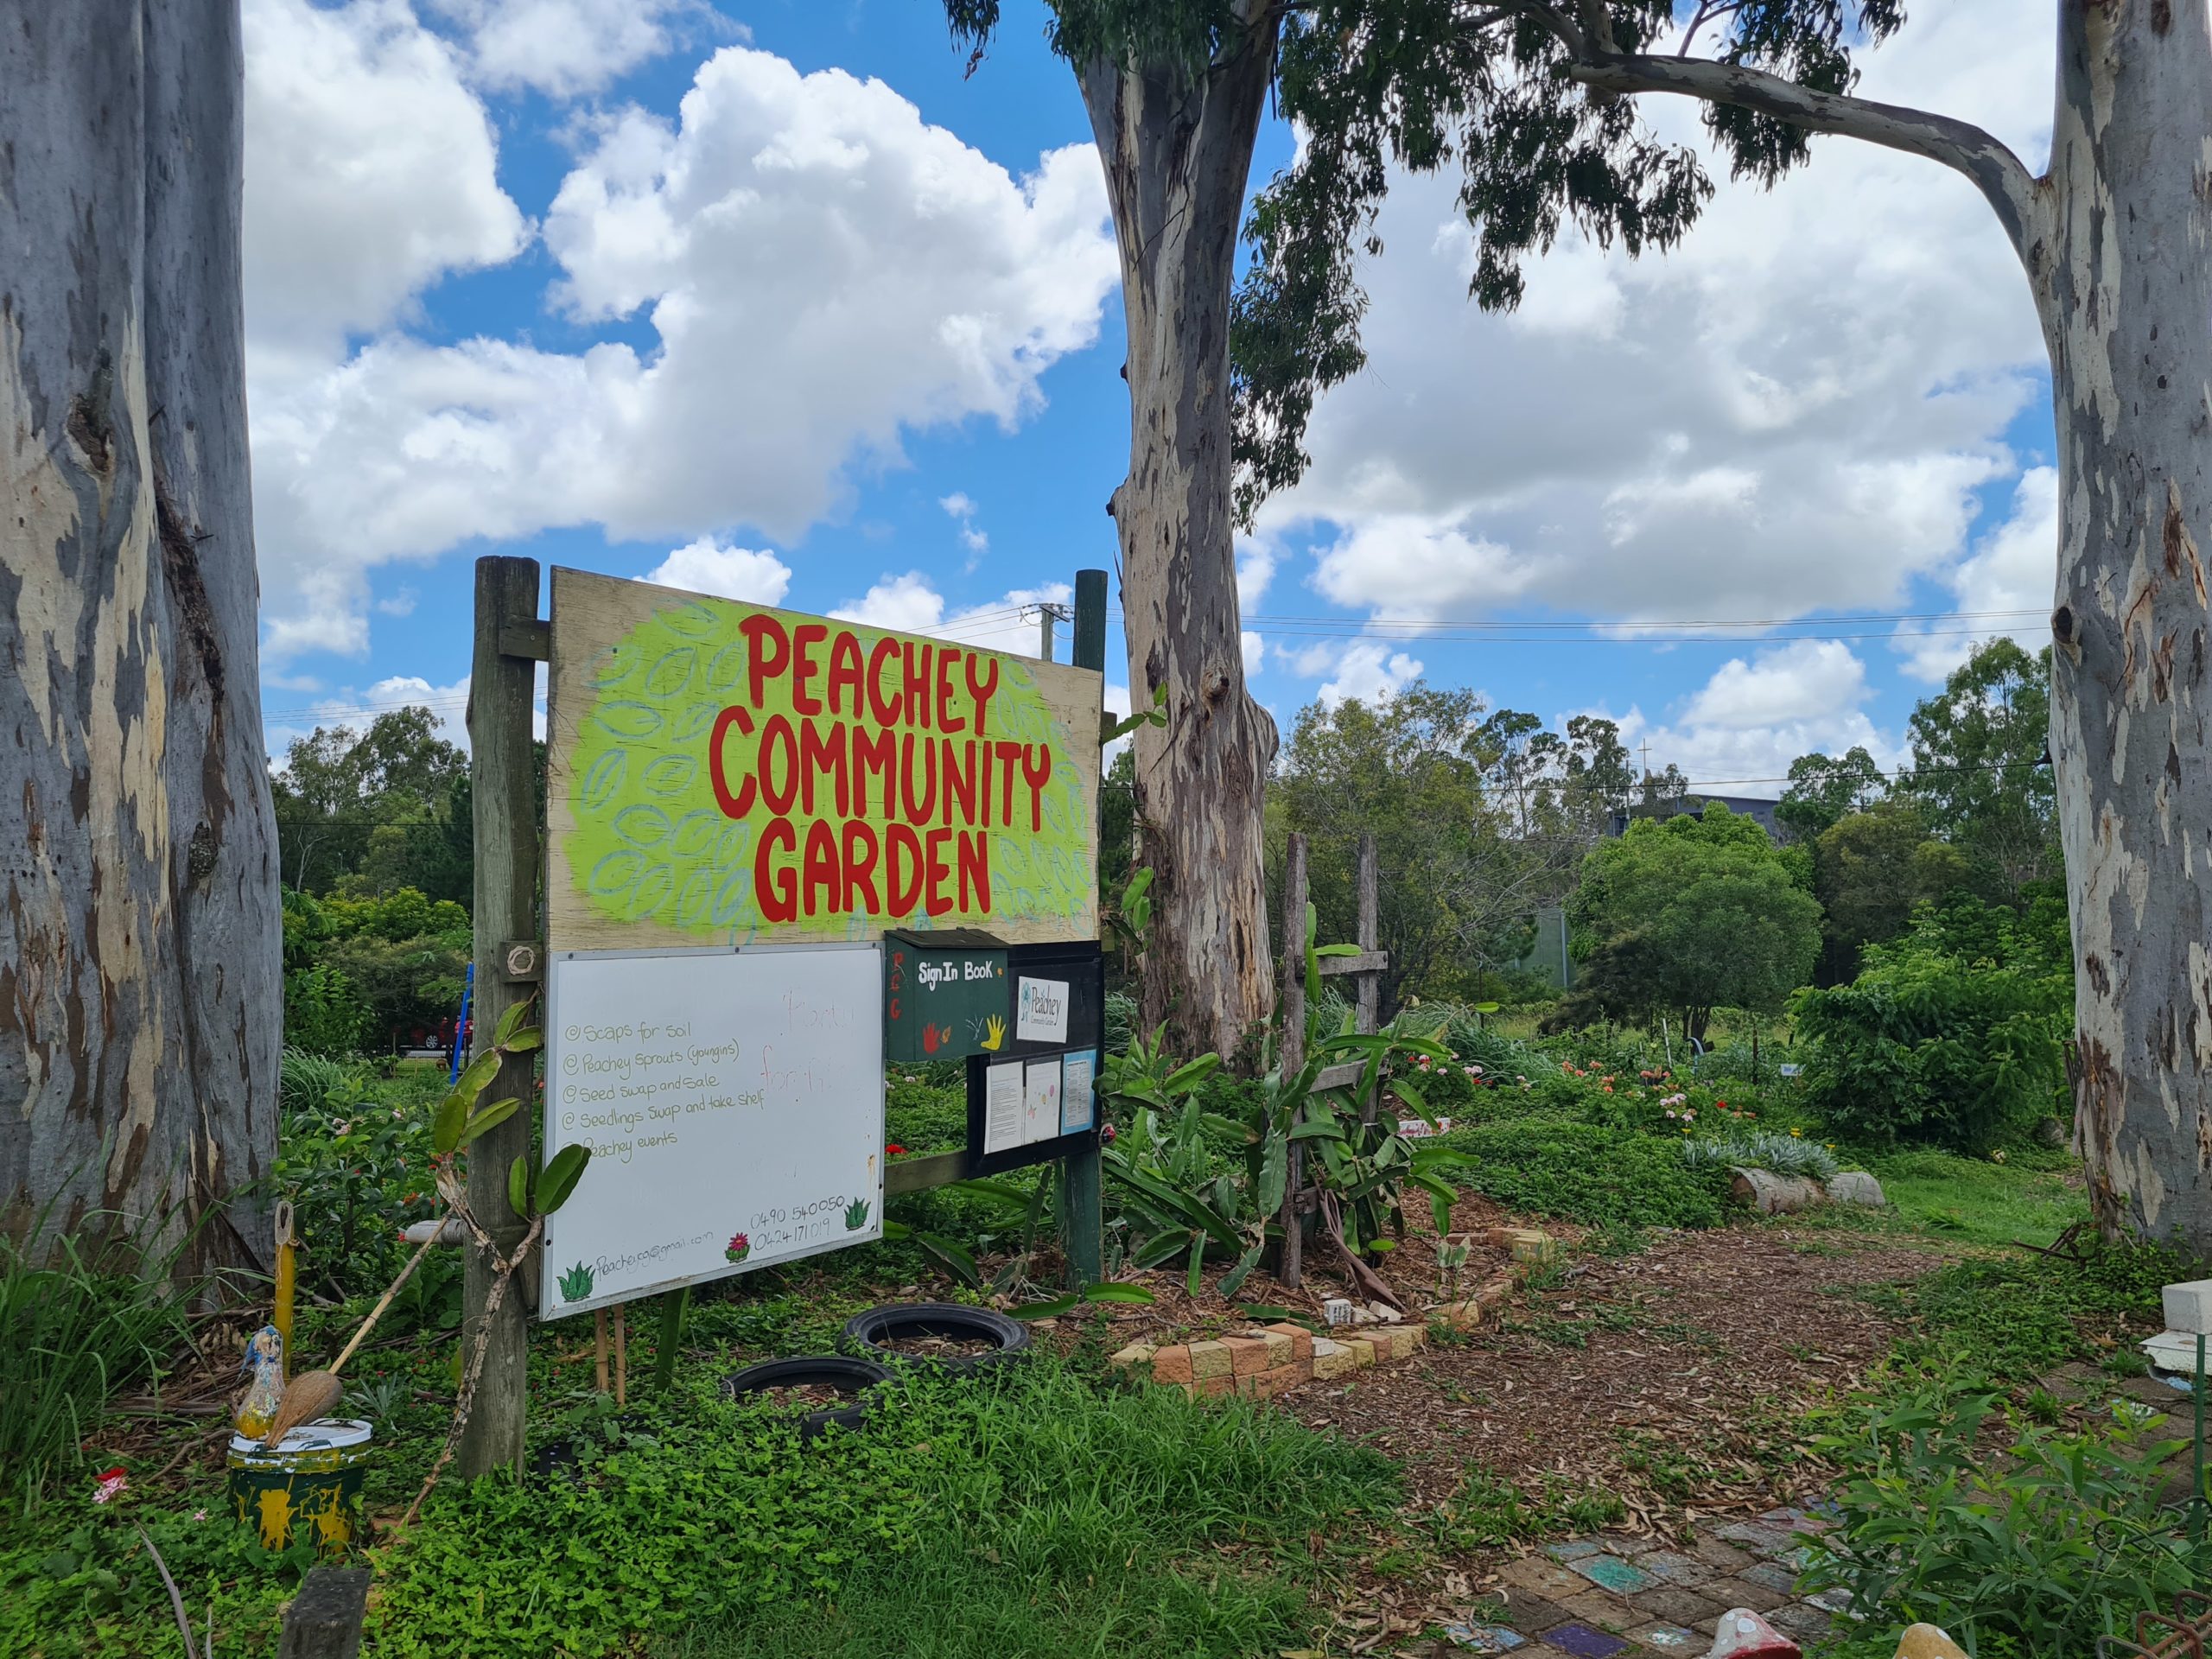 Visit Peachey Community Garden